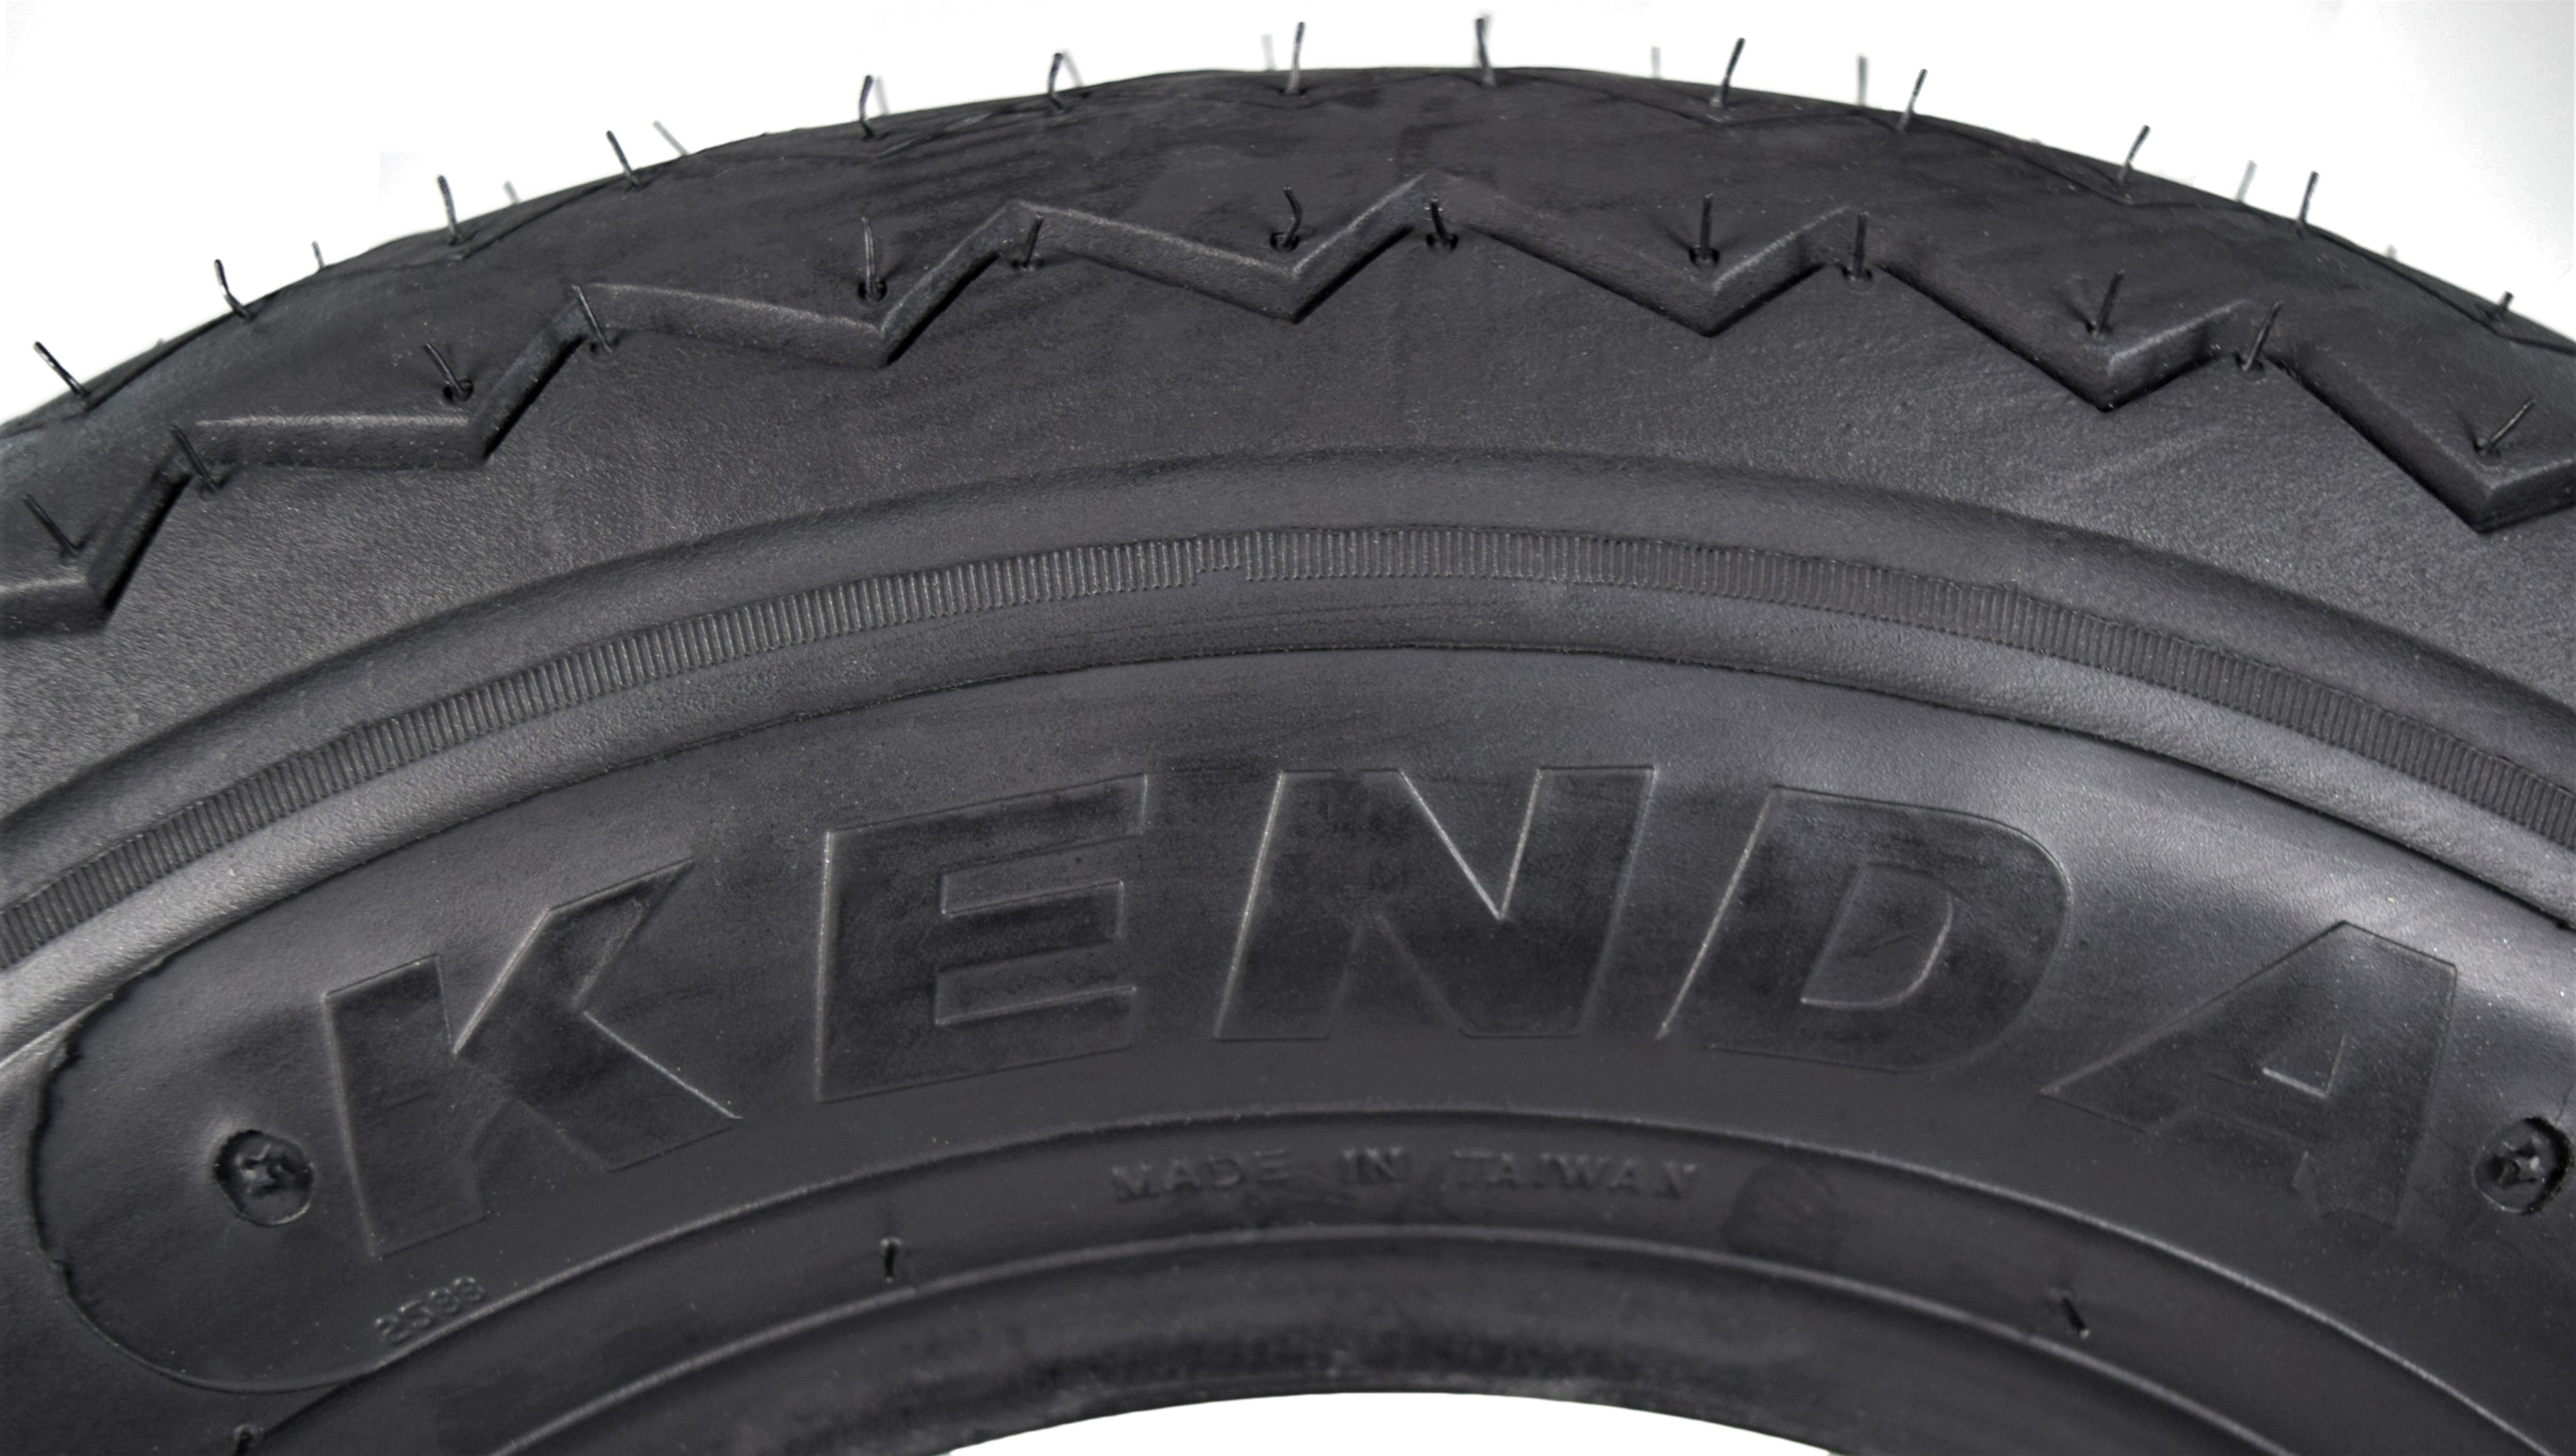 Kenda-235Q2076-20x10-10-Hole-N-1-6-Ply-Tubeless-Golf-Cart-Turf-Tires-4-Pack-image-5